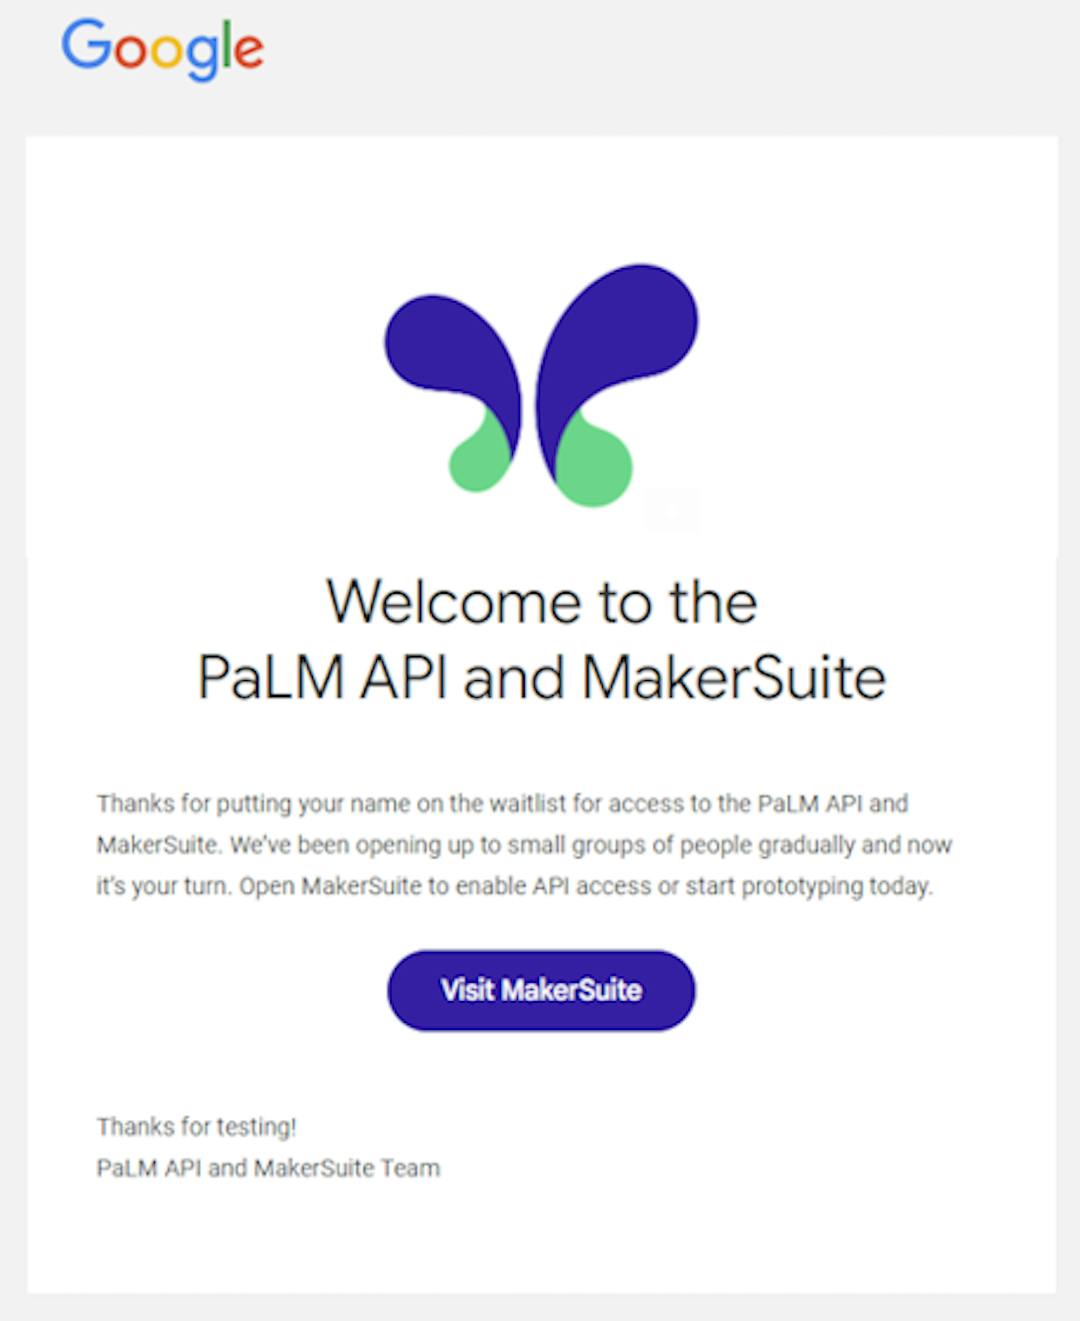 PaLM API 및 MakerSuite 액세스에 관한 Google의 환영 이메일